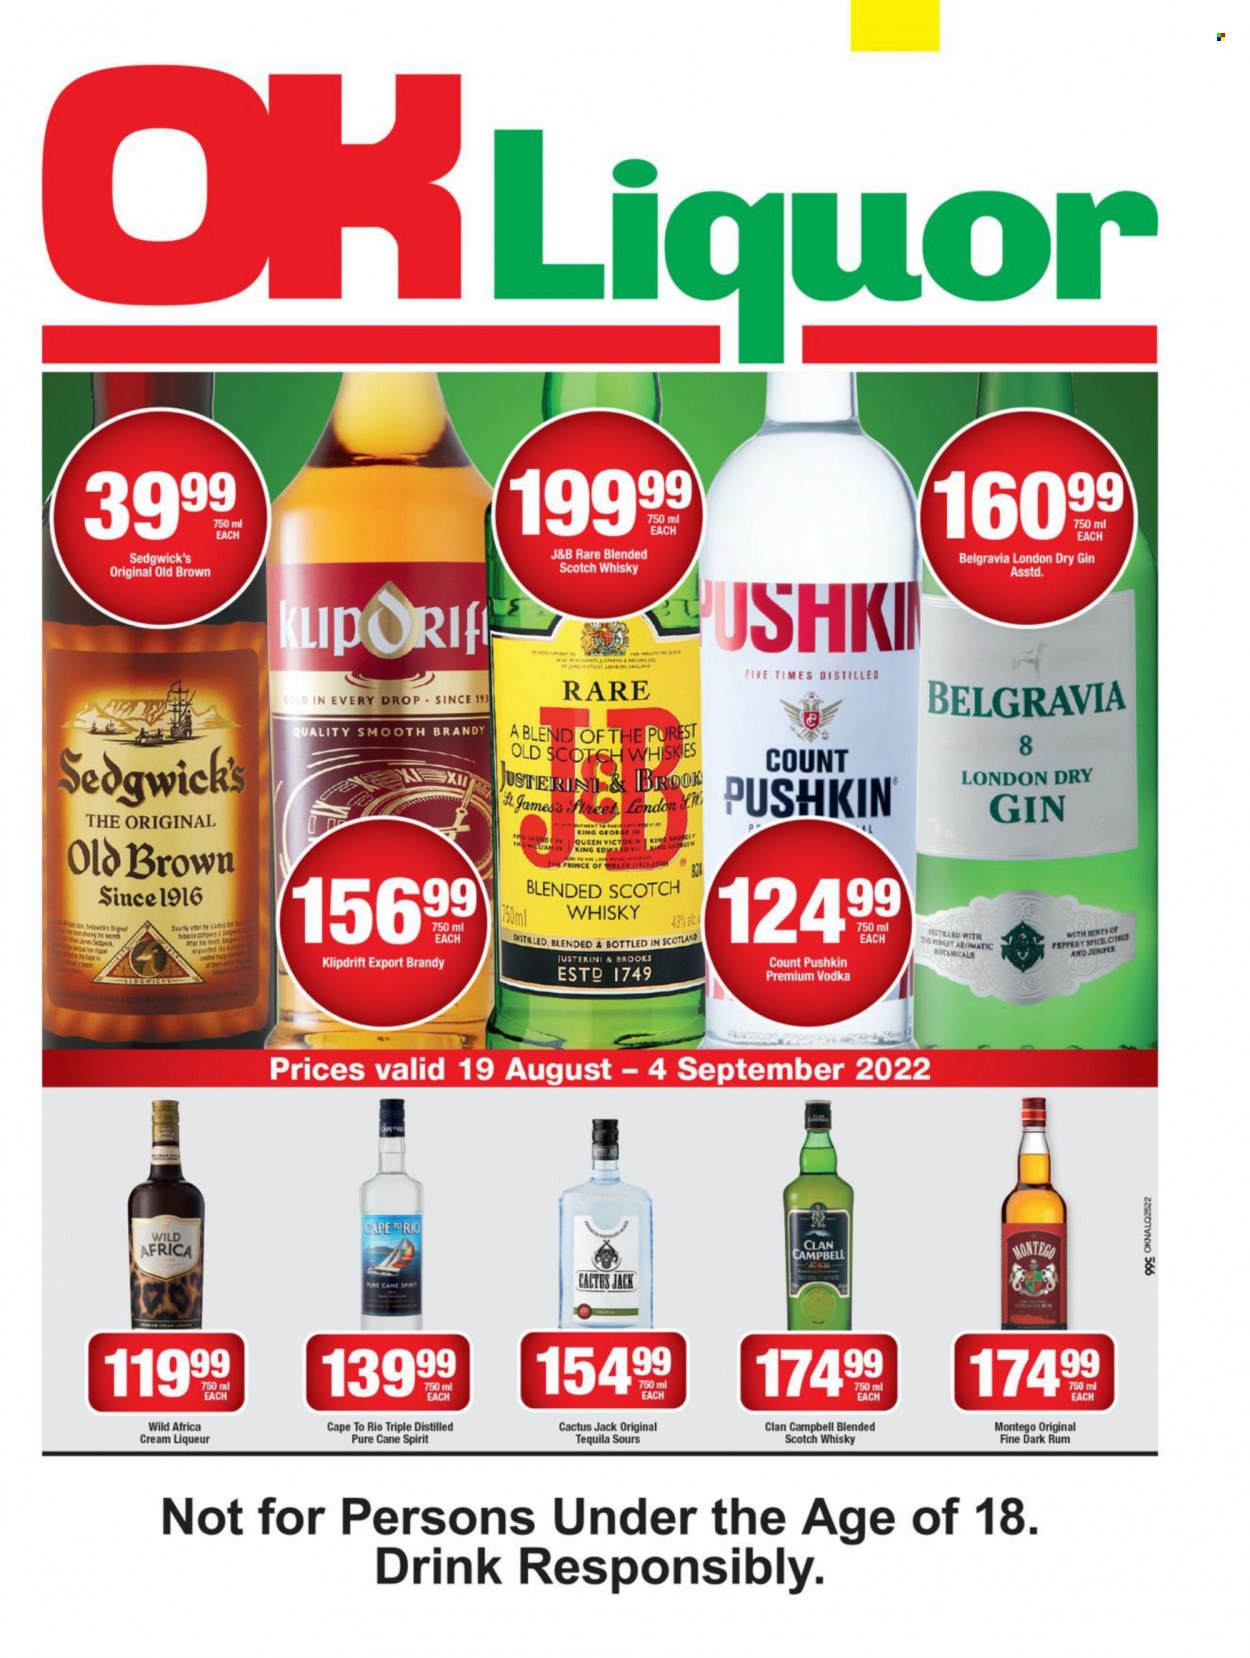 OK catalogue  - 19/08/2022 - 04/09/2022 - Sales products - Victoria, spice, brandy, gin, liqueur, rum, tequila, vodka, liquor, Klipdrift, Belgravia, Wild Africa, scotch whisky, whisky. Page 1.